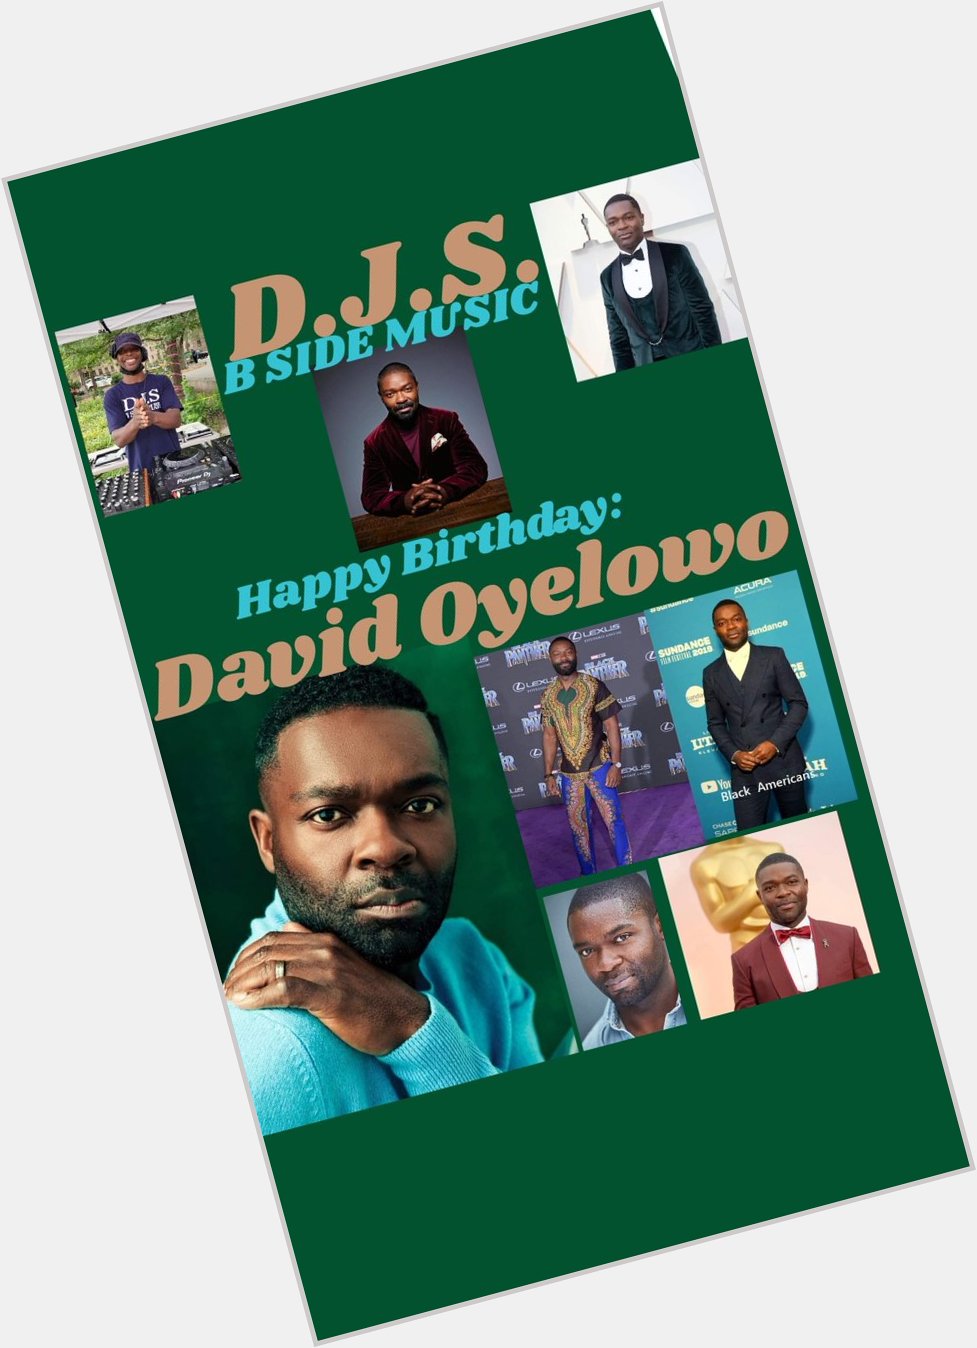 I(D.J.S.)\"B SIDE MUSIC\" saying Happy Birthday to Actor: \"DAVID OYELOWO\"!!! 